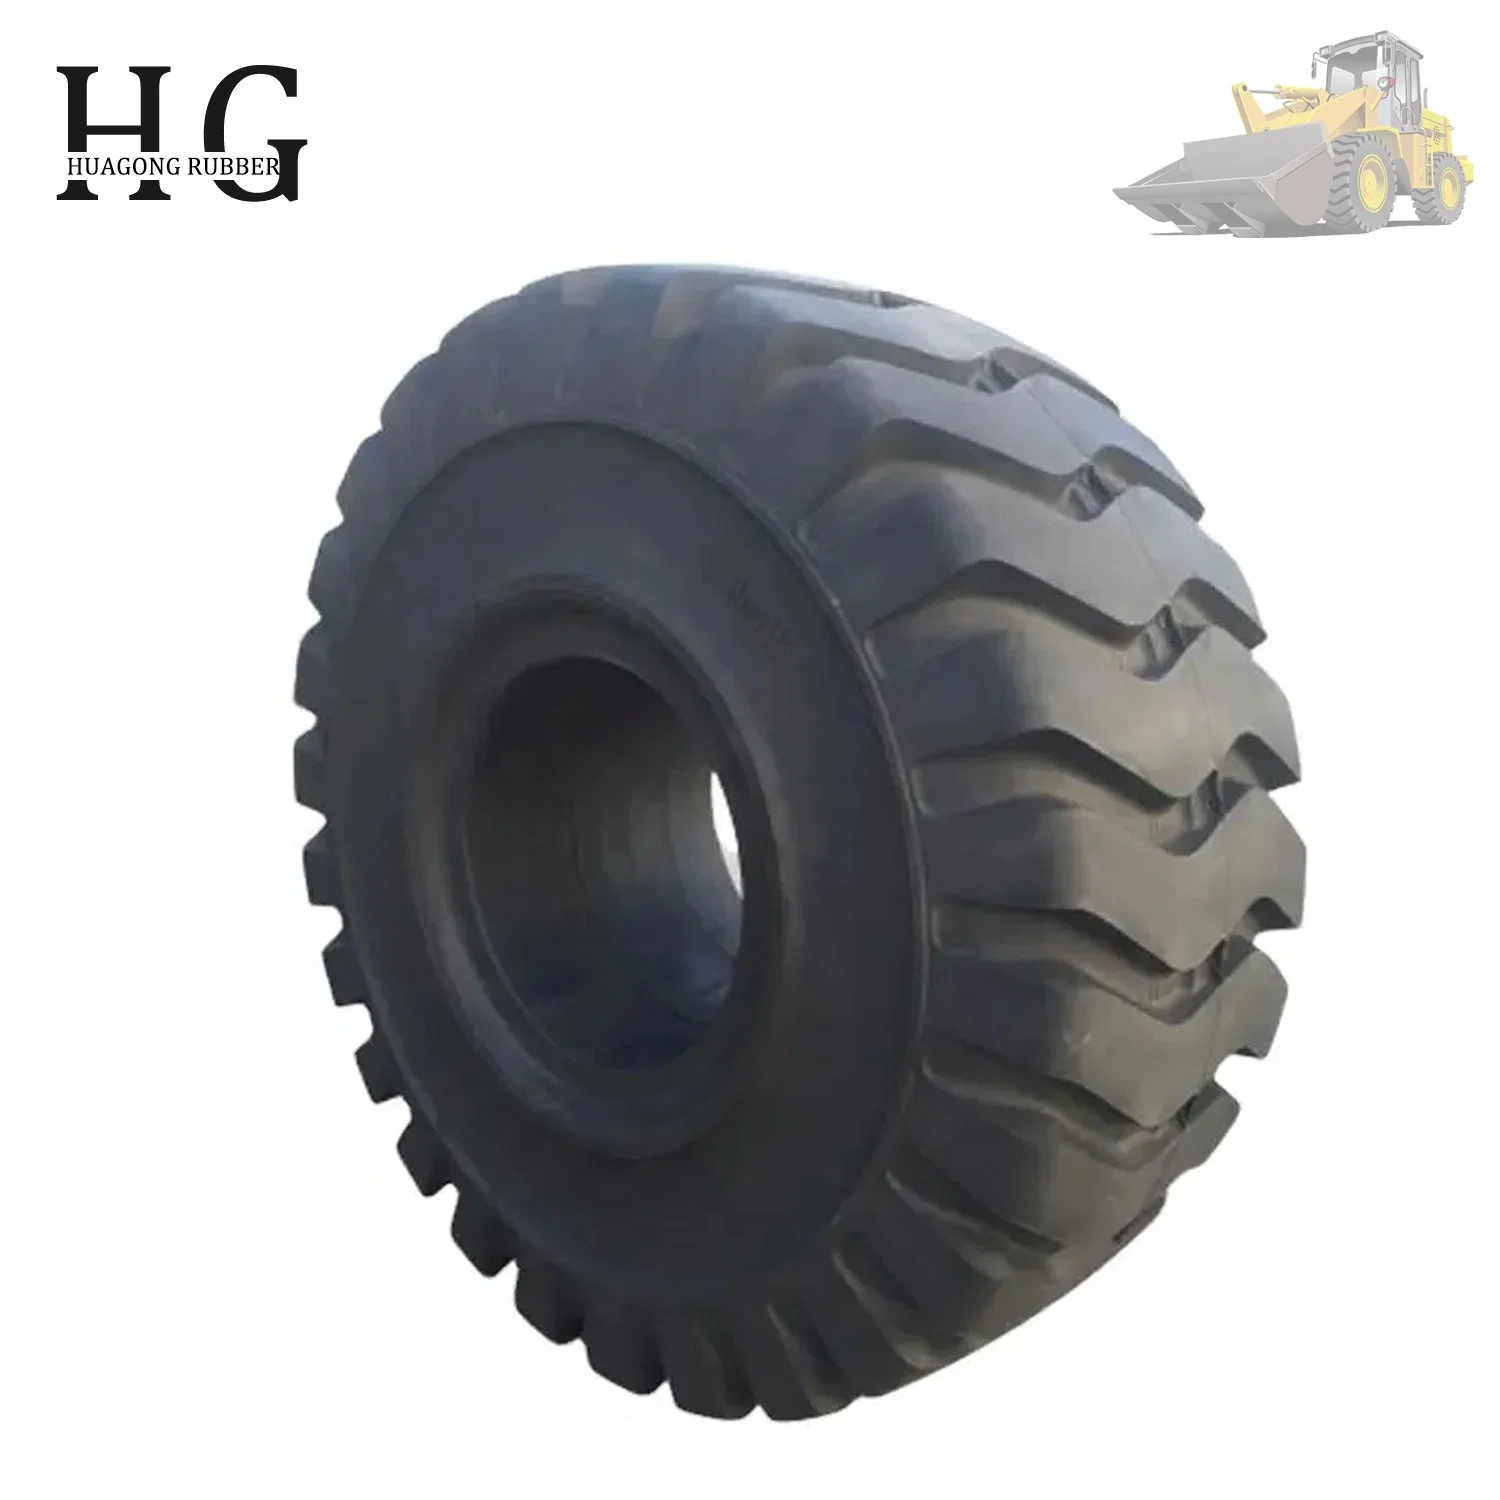 E3 L3 G2 L5 OTR Tyre 29.5-25 26.5-25 23.5-25 20.5-25 17.5-25